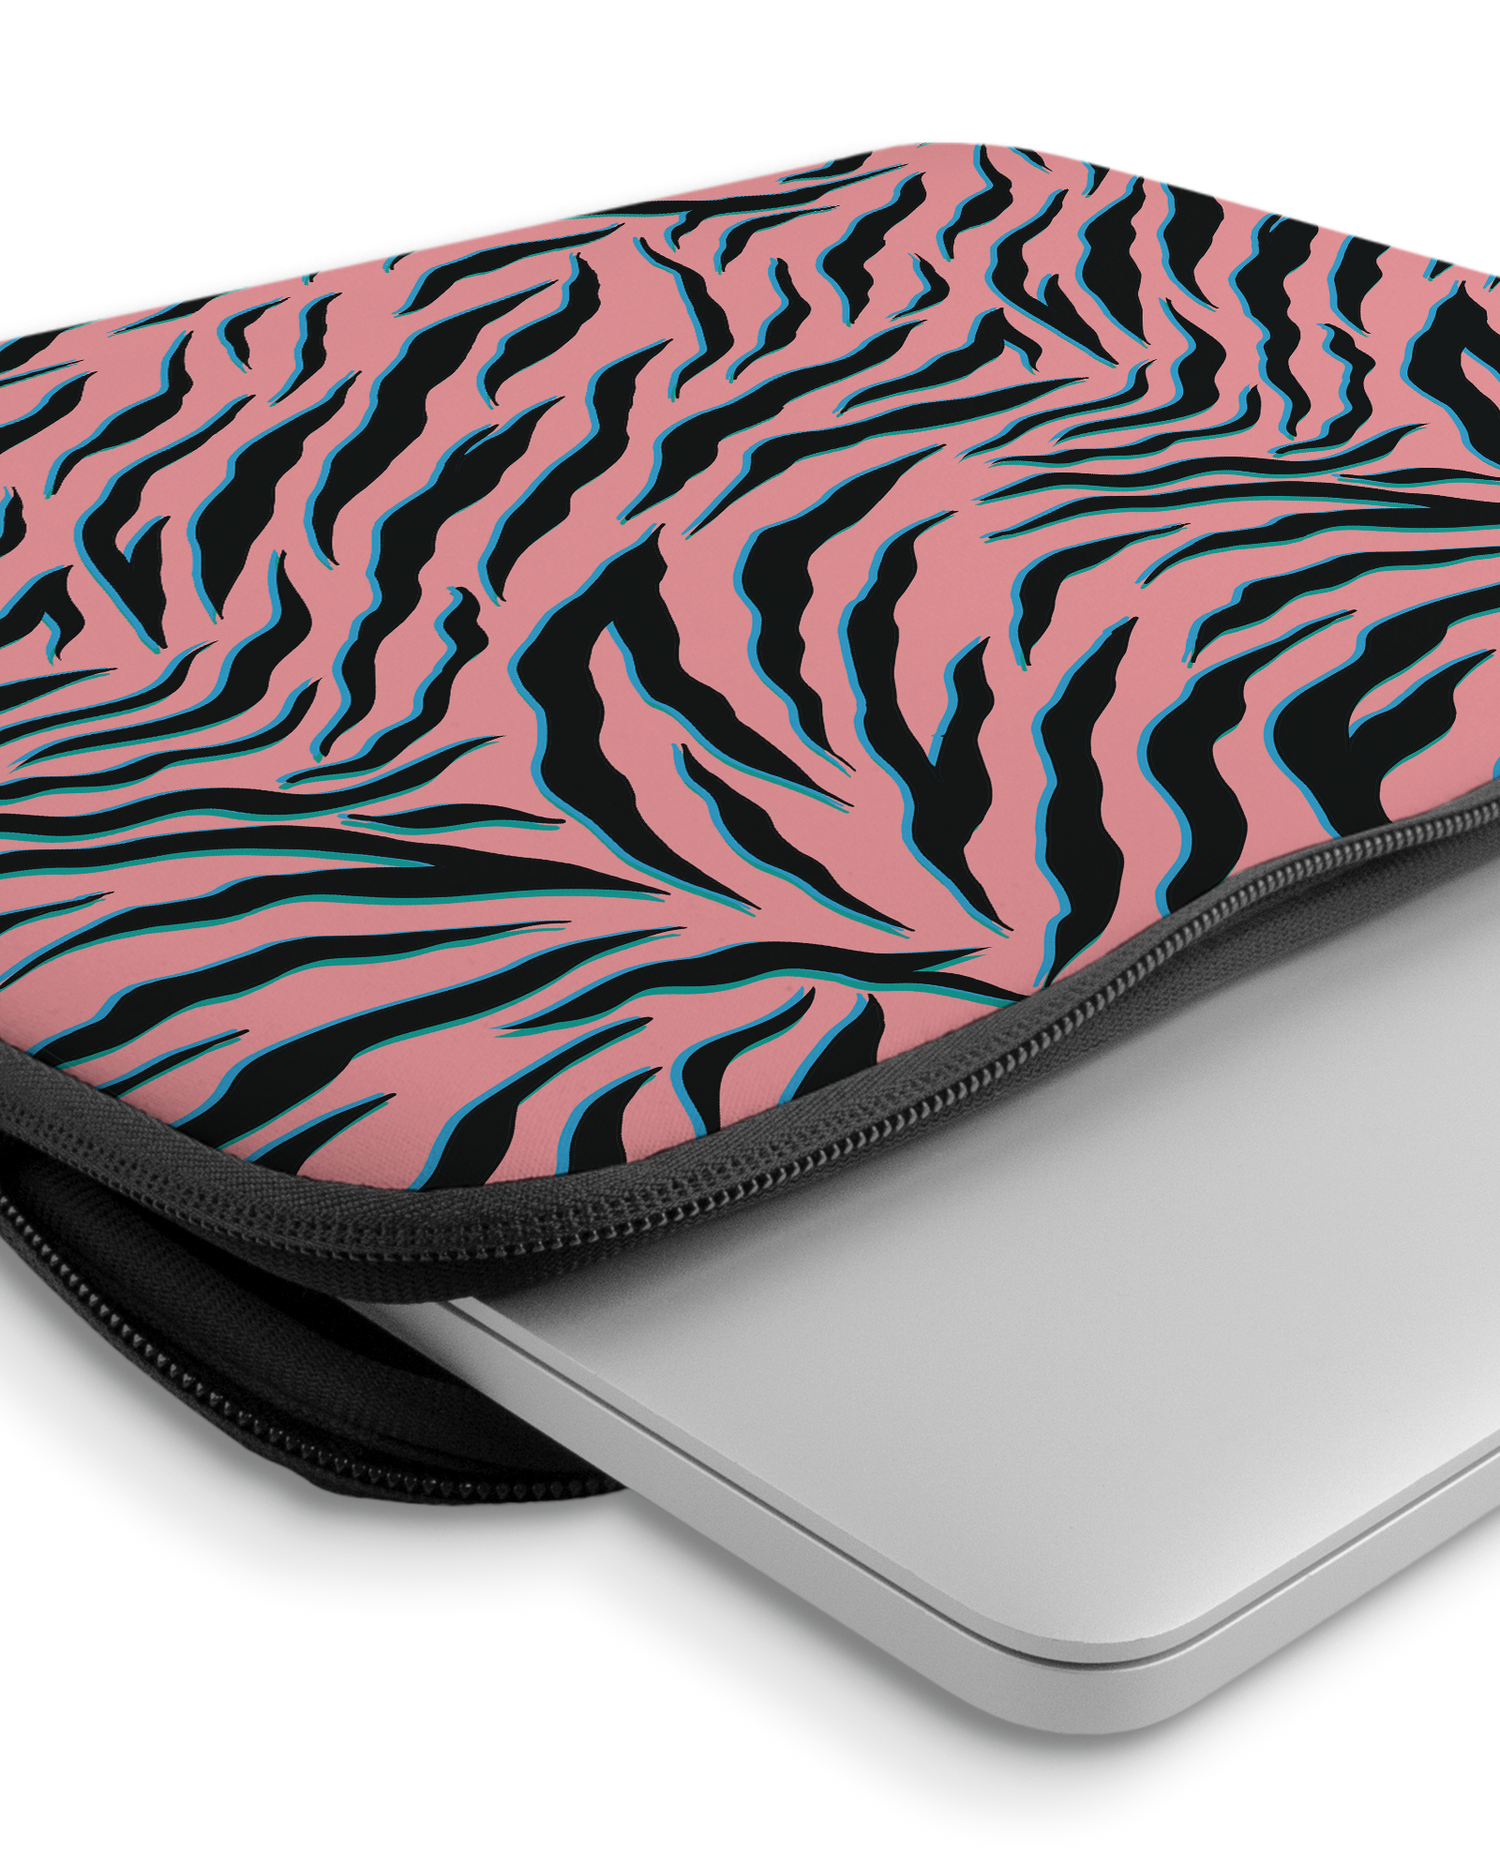 Pink Zebra Laptophülle 14-15 Zoll mit Gerät im Inneren